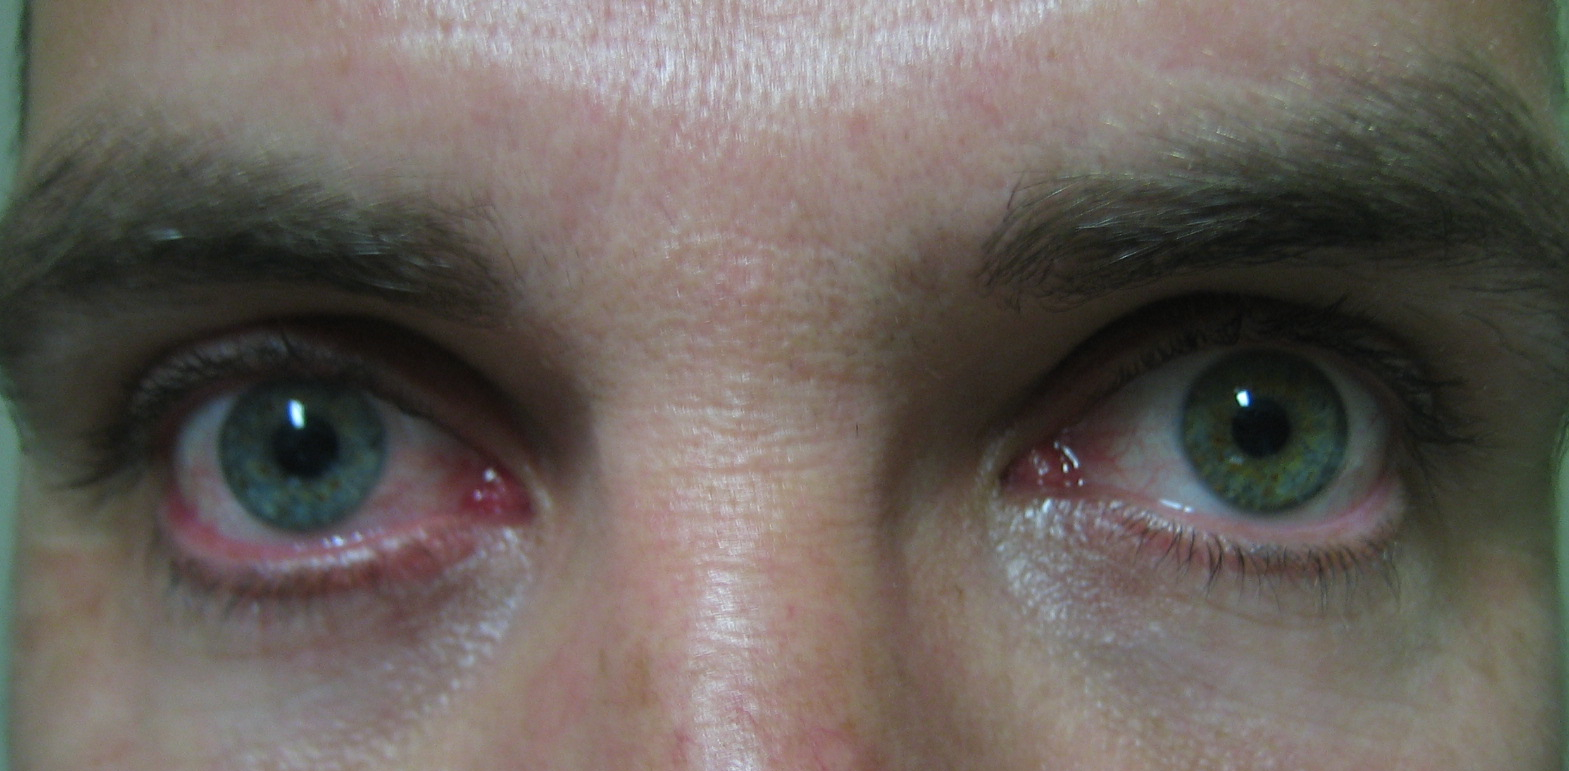 Figure 1.2.16 Fuchs Heterochromic Iridocyclitis
Heterochromia iridis is often the least prevalent sign in Fuchs Heterochromic Iridocyclitis